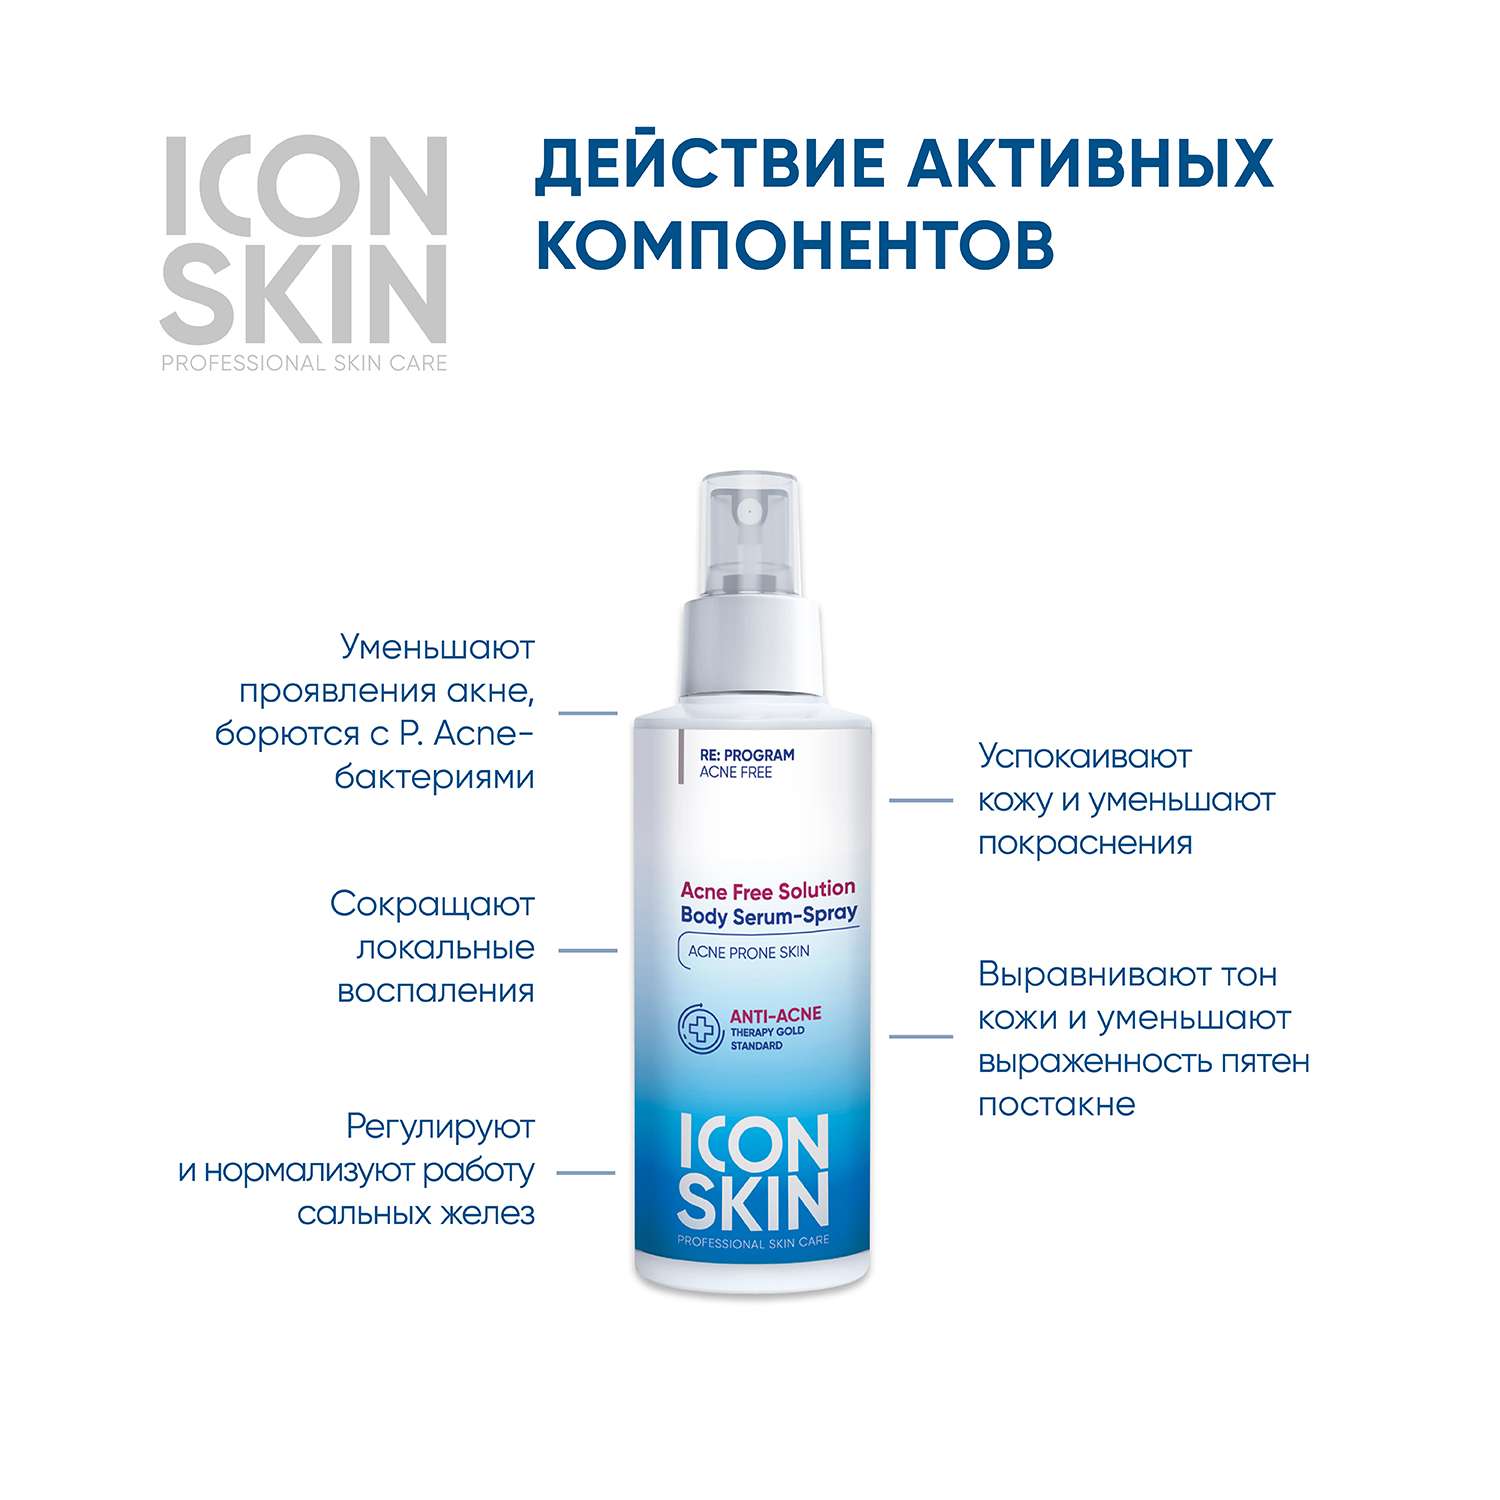 Сыворотка ICON SKIN спрей от акне на теле acne free solution - фото 2